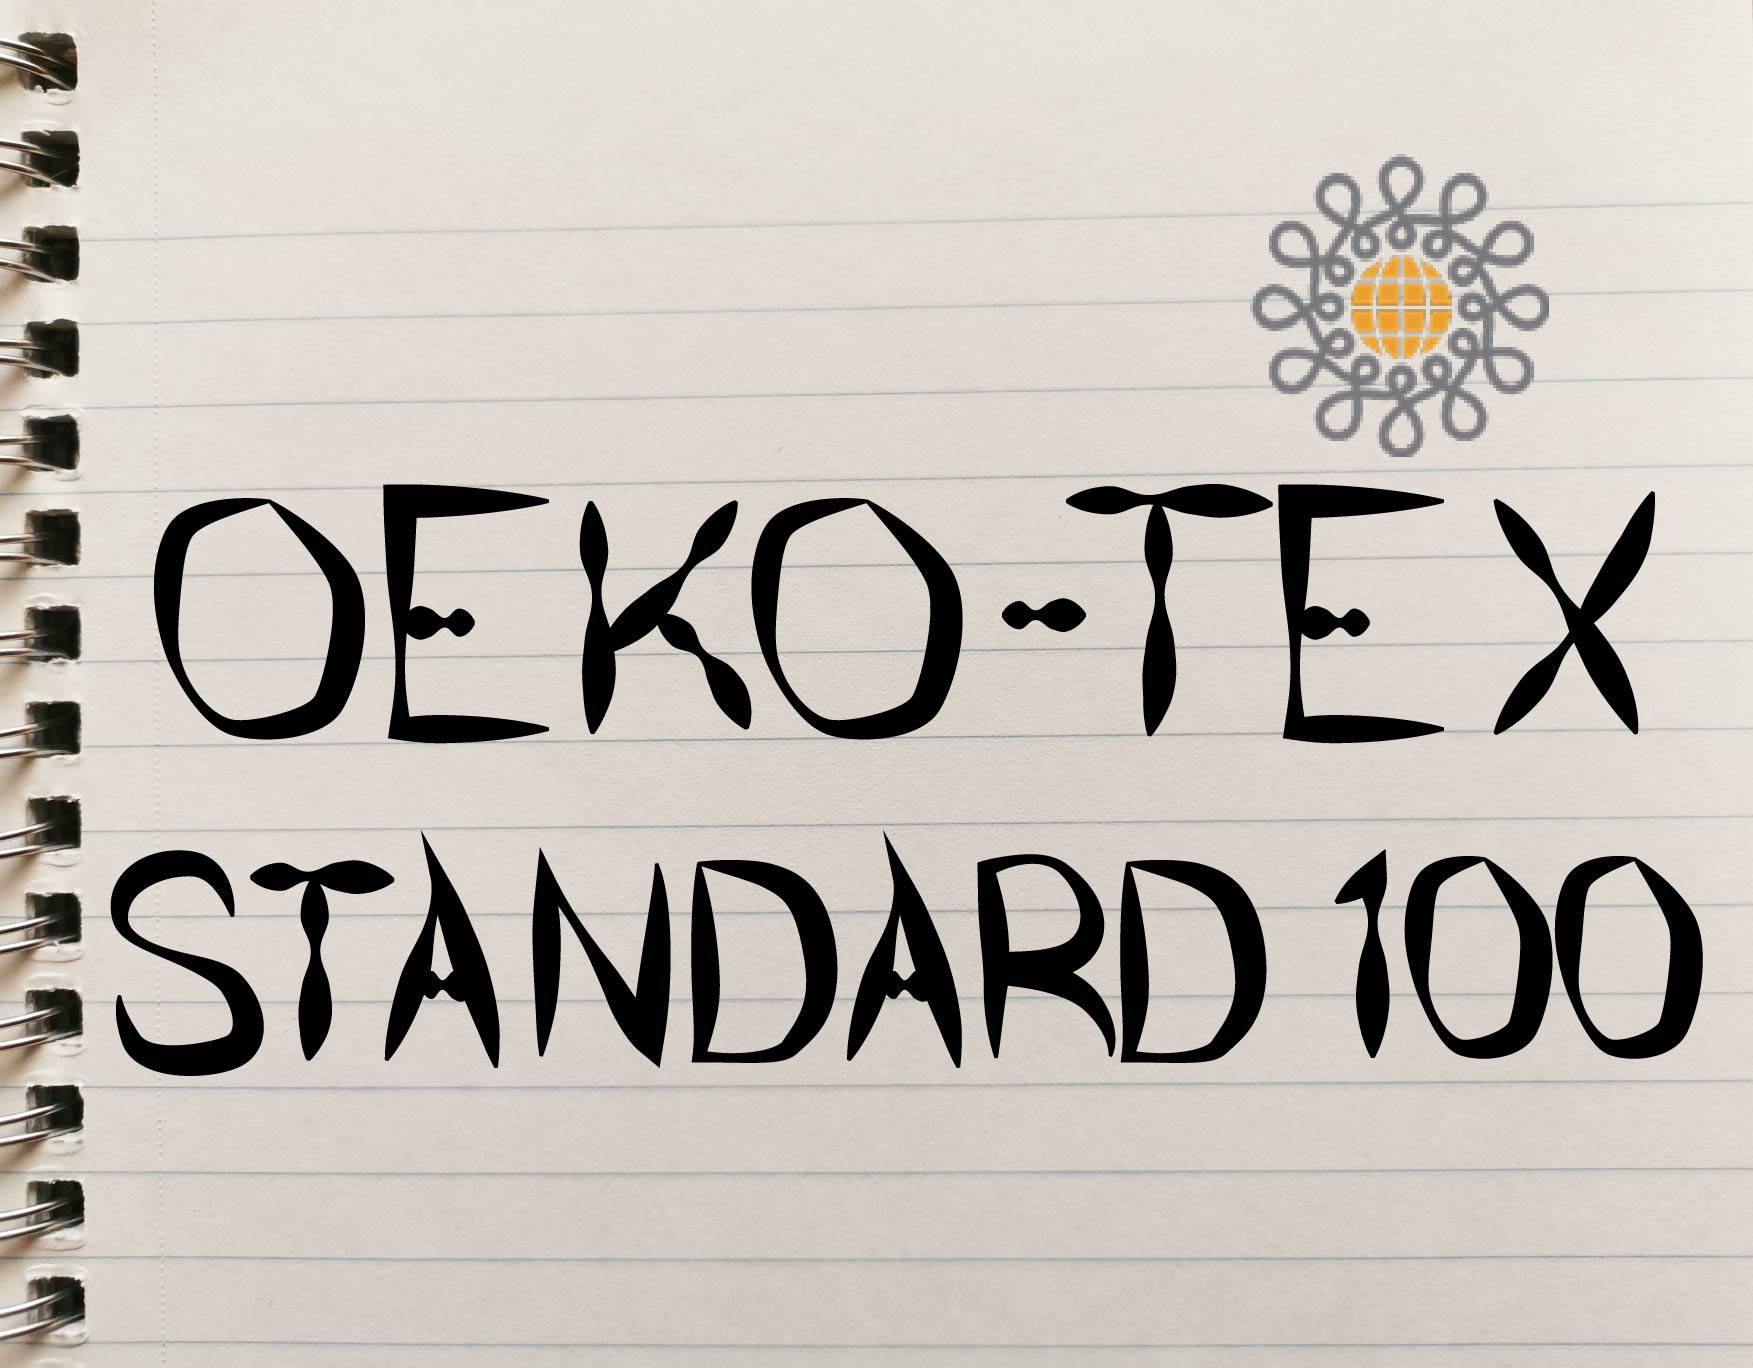 OEKO-TEX Standard 